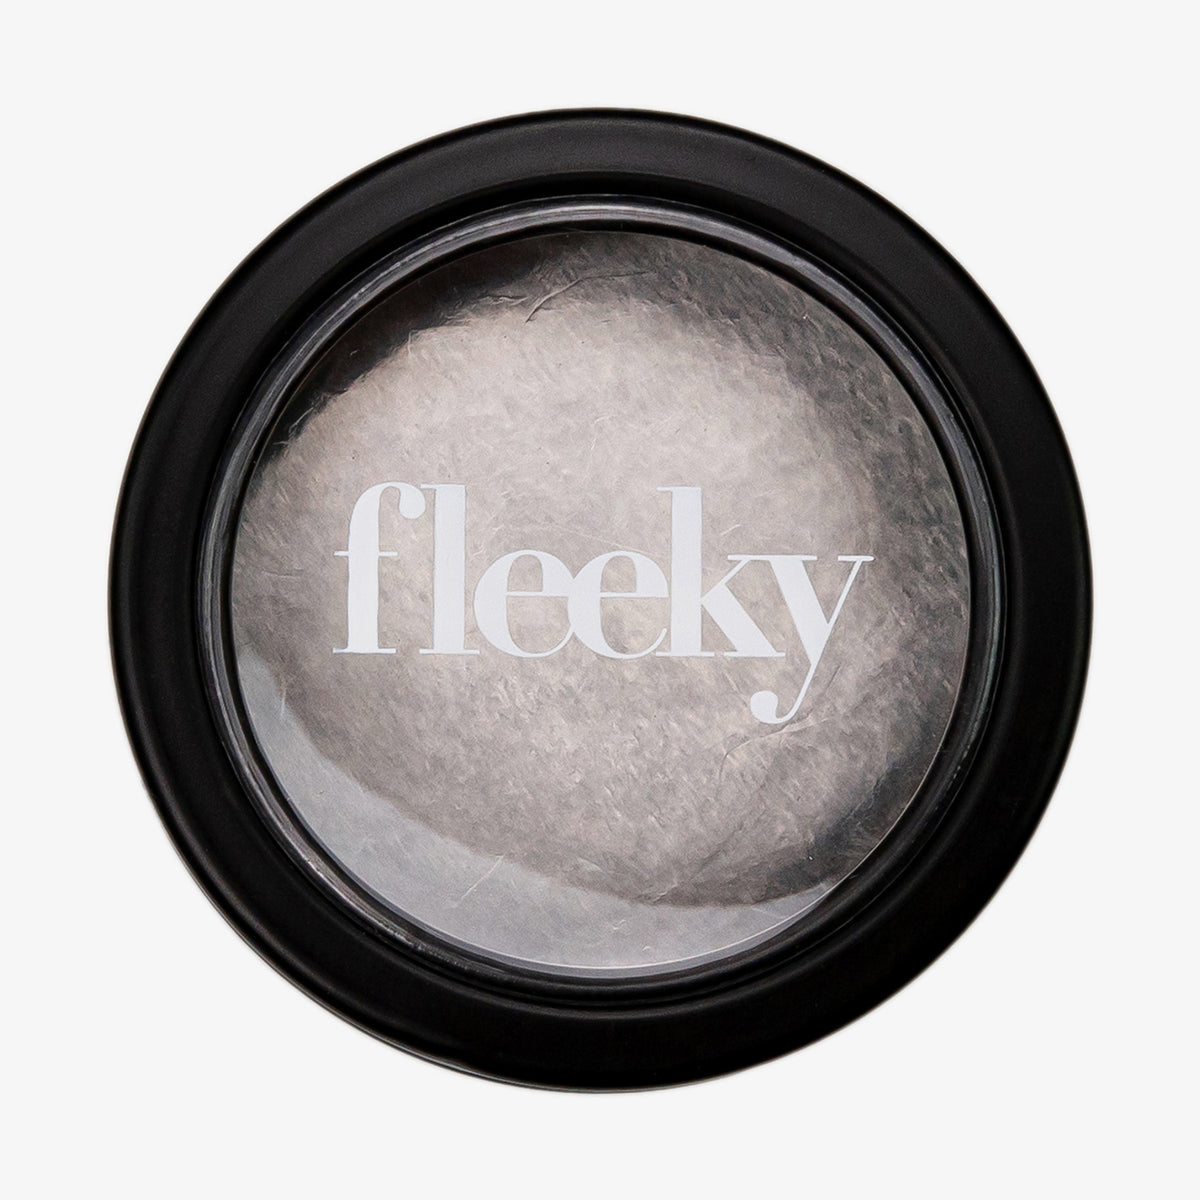 fleeky | Brow Gel